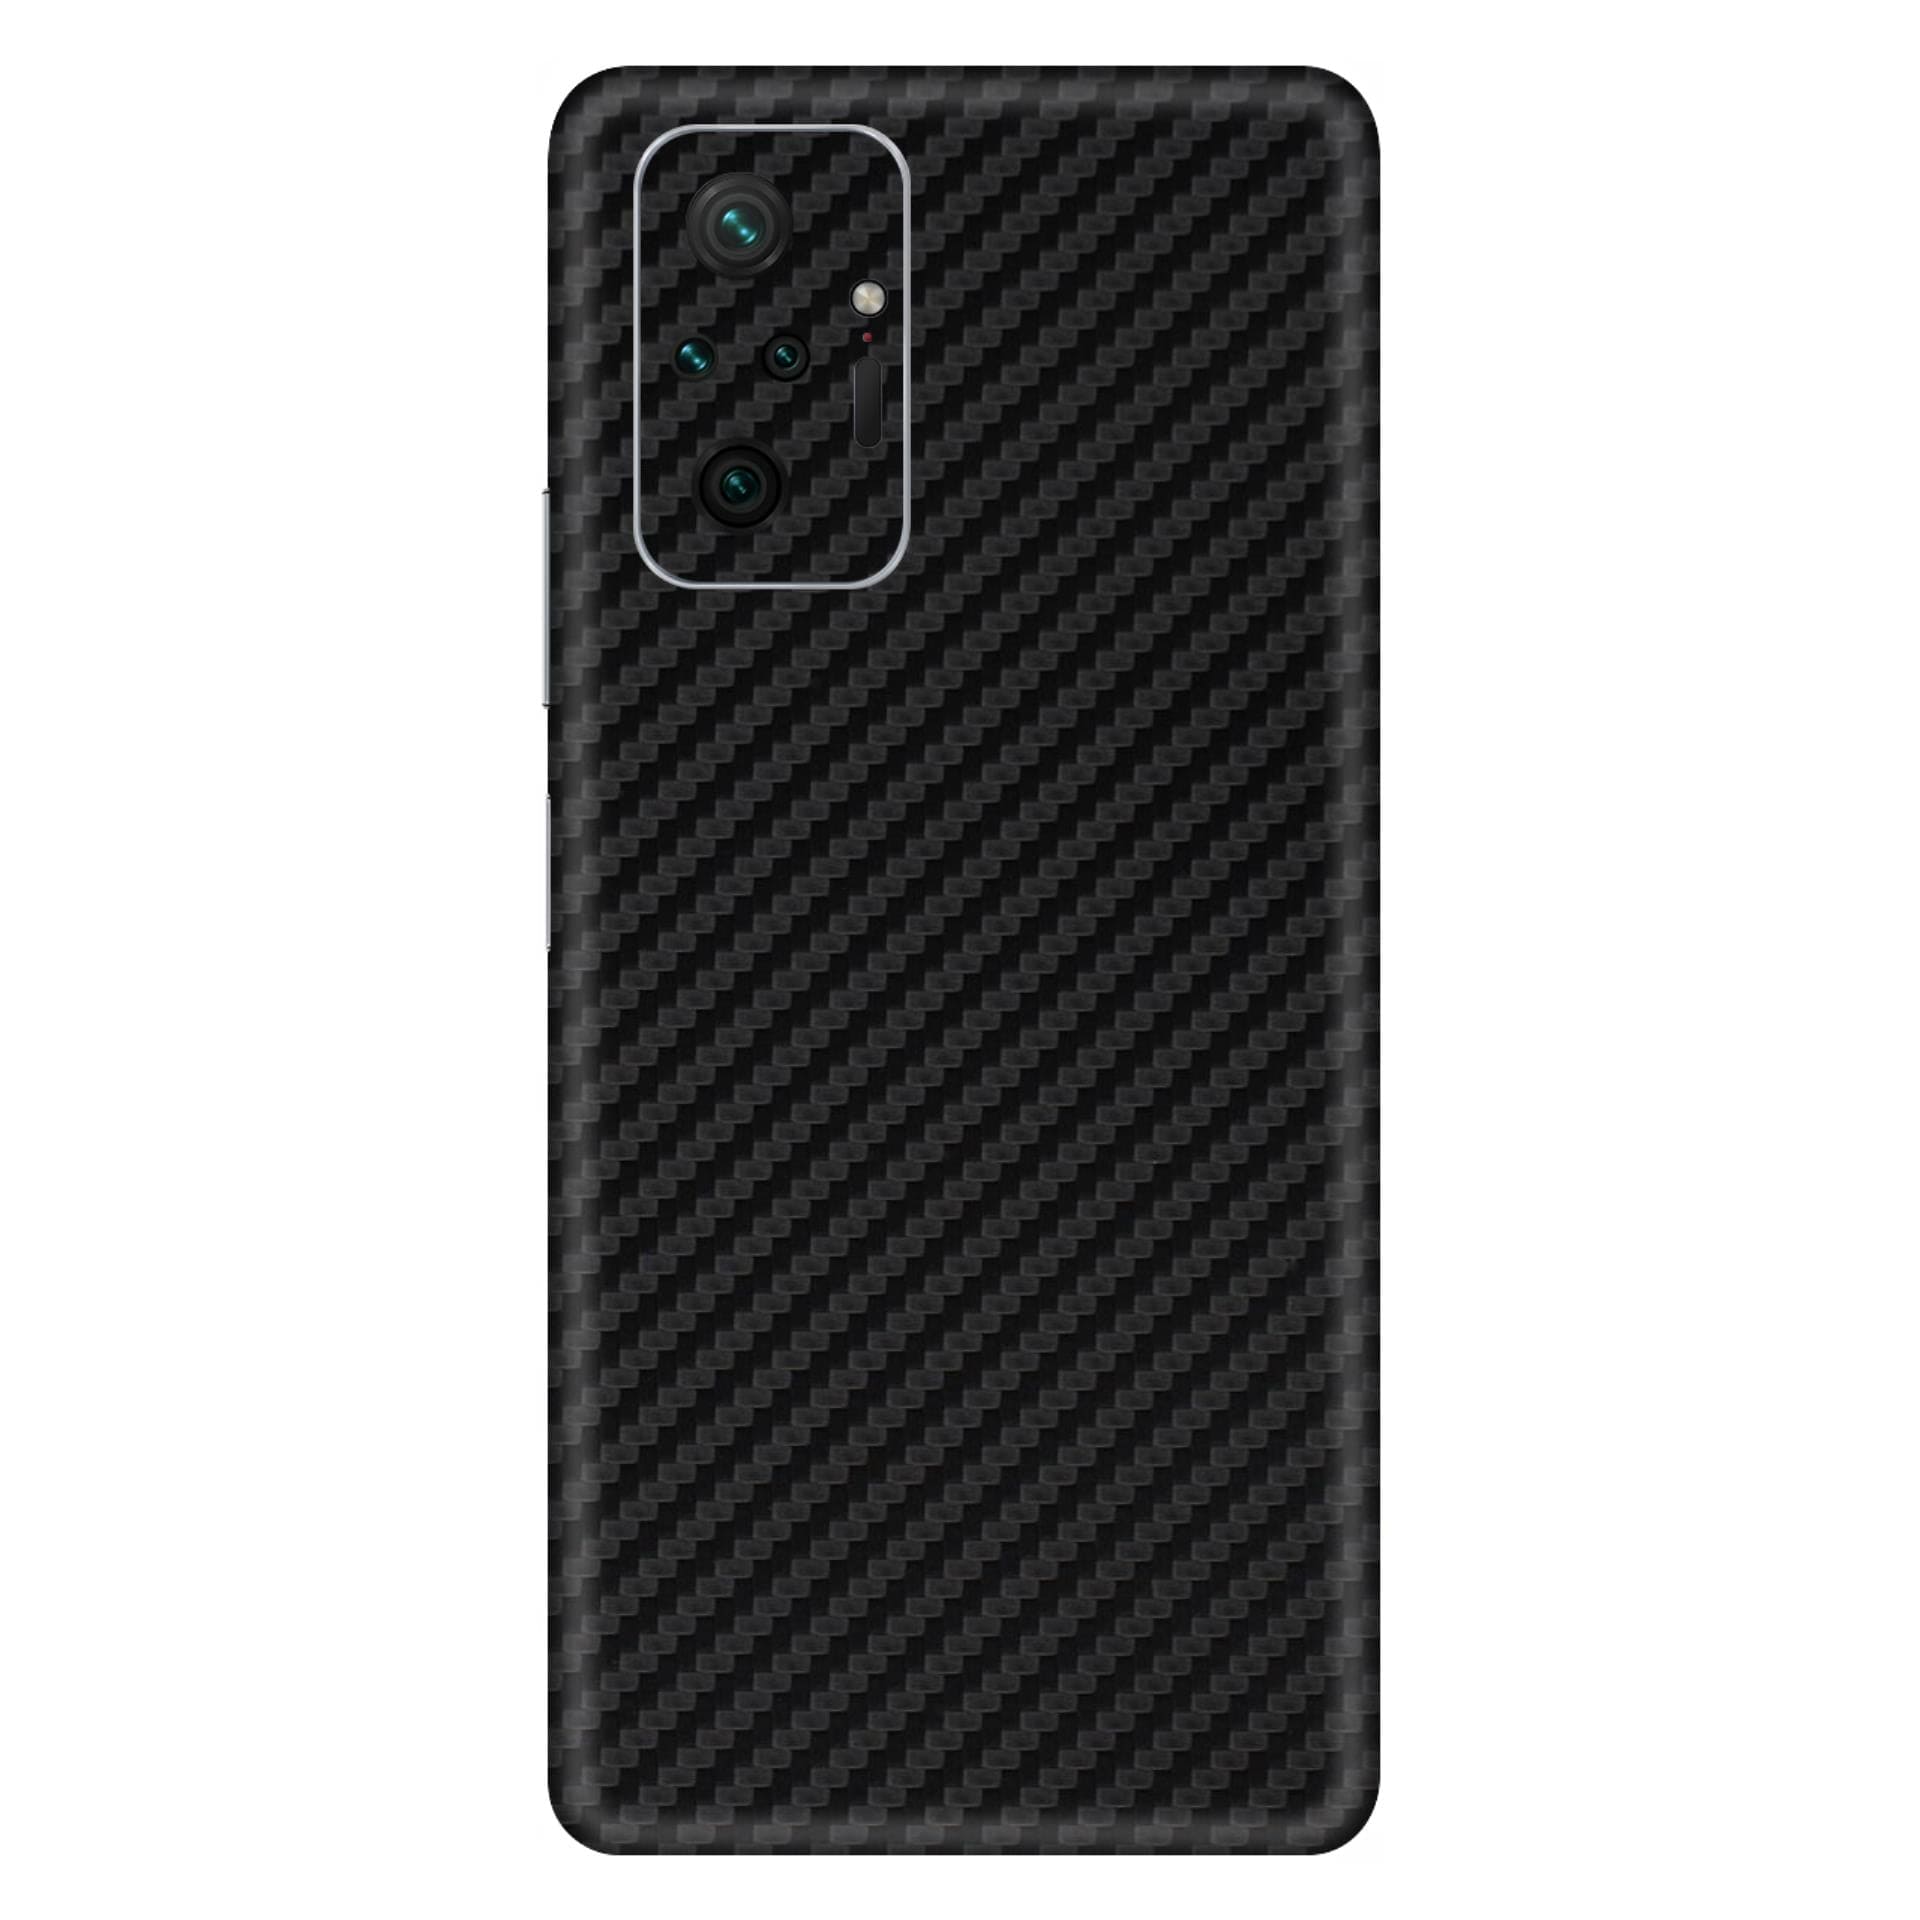 Redmi Note 10 Pro Max Carbon Black skins